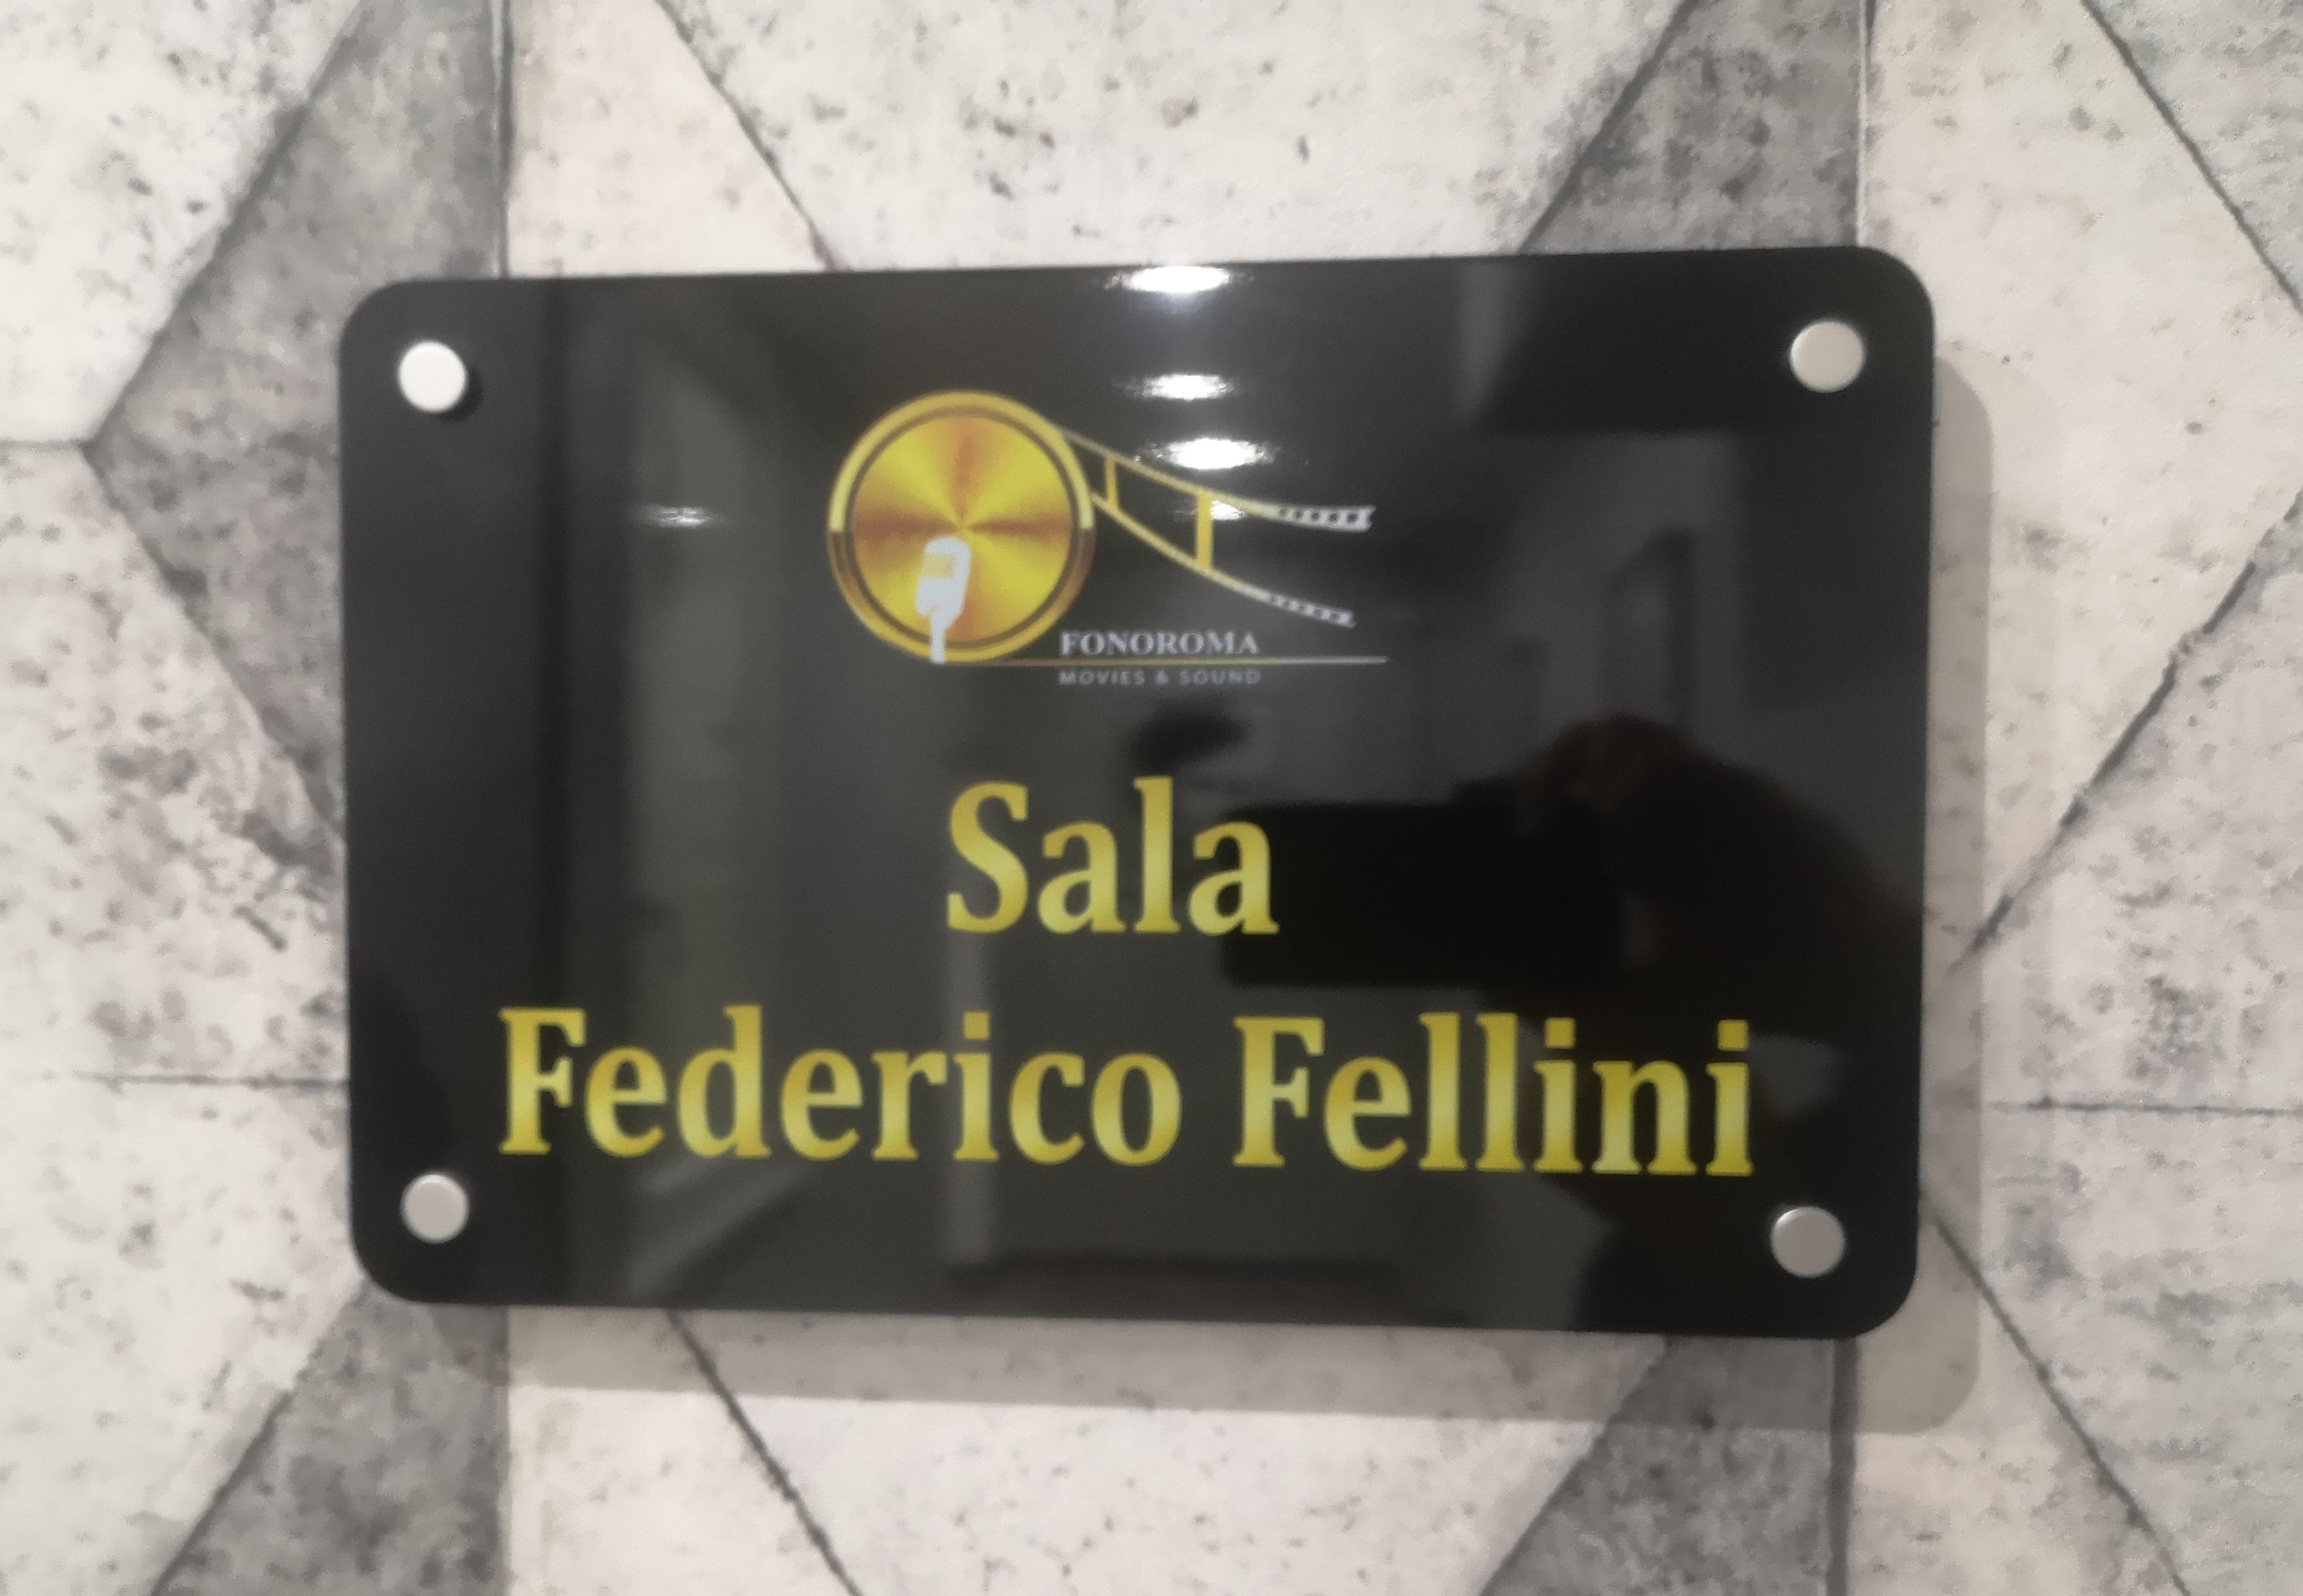 Sala Federico Fellini